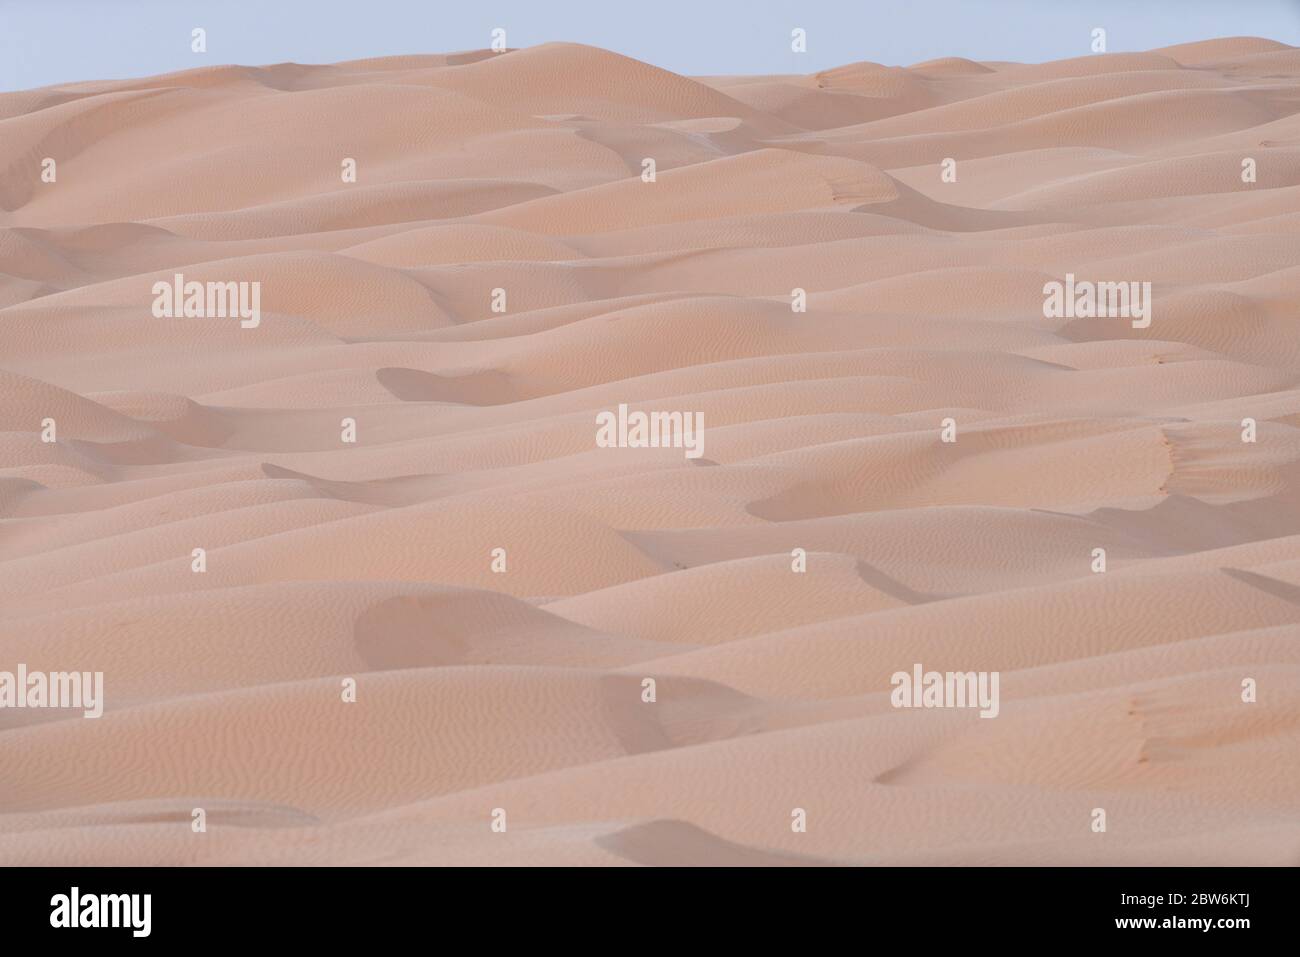 View of the Desert in Tunisia Stock Photo